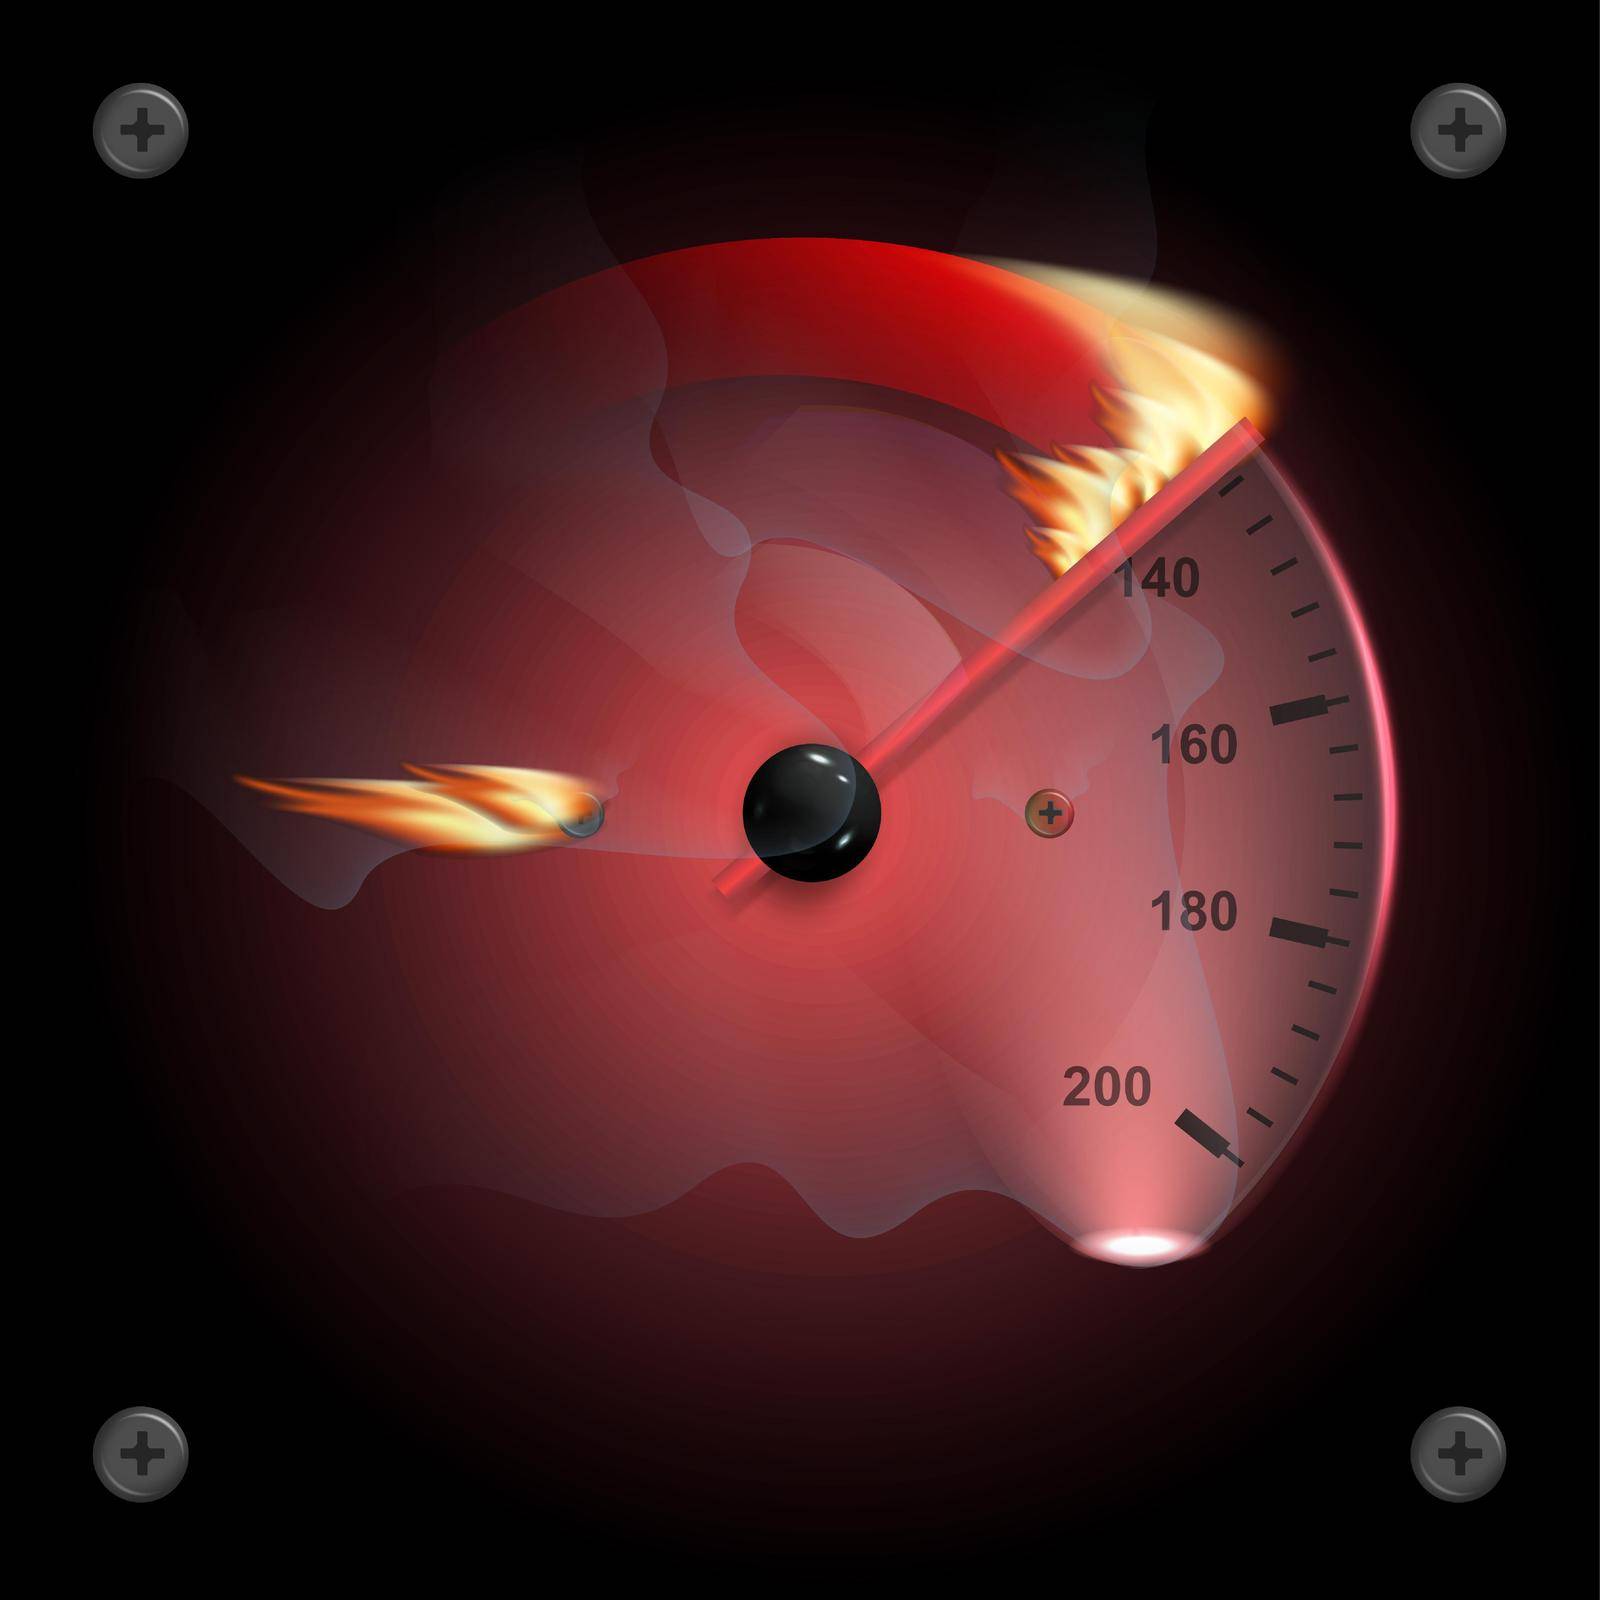 Burning vector speedometer fire flame illustration on the black